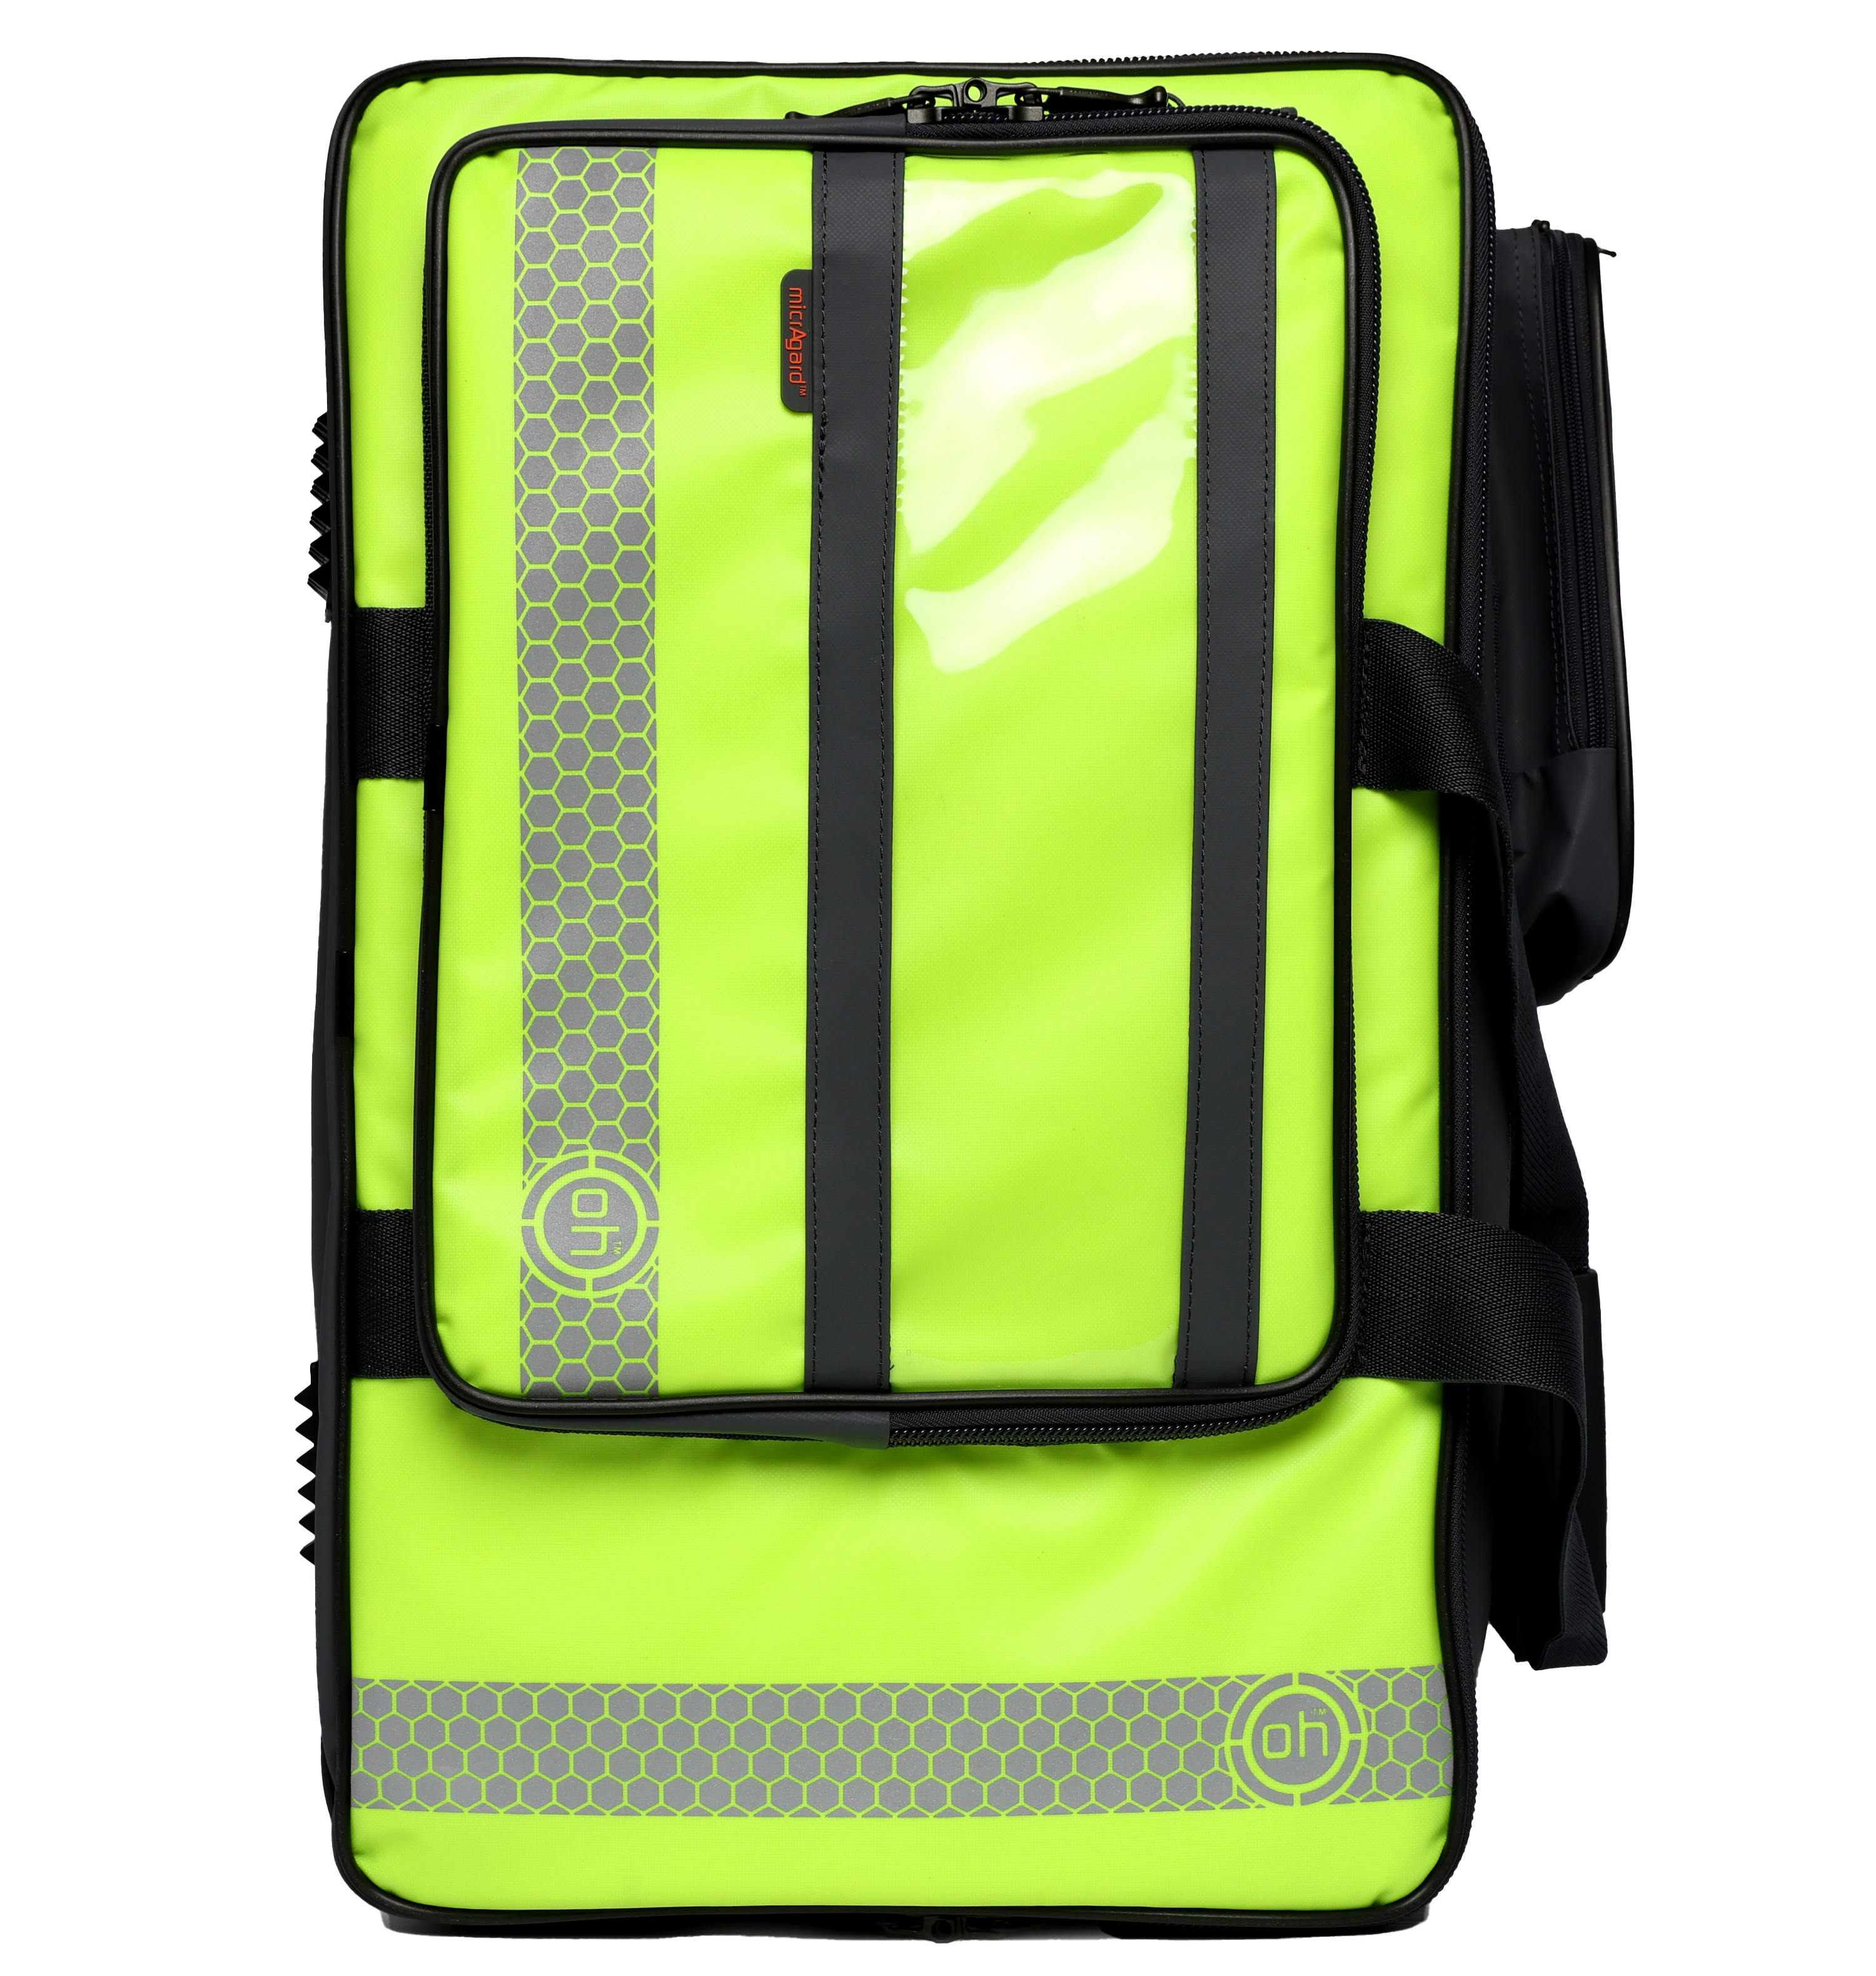 OH Paramedic Response Backpack